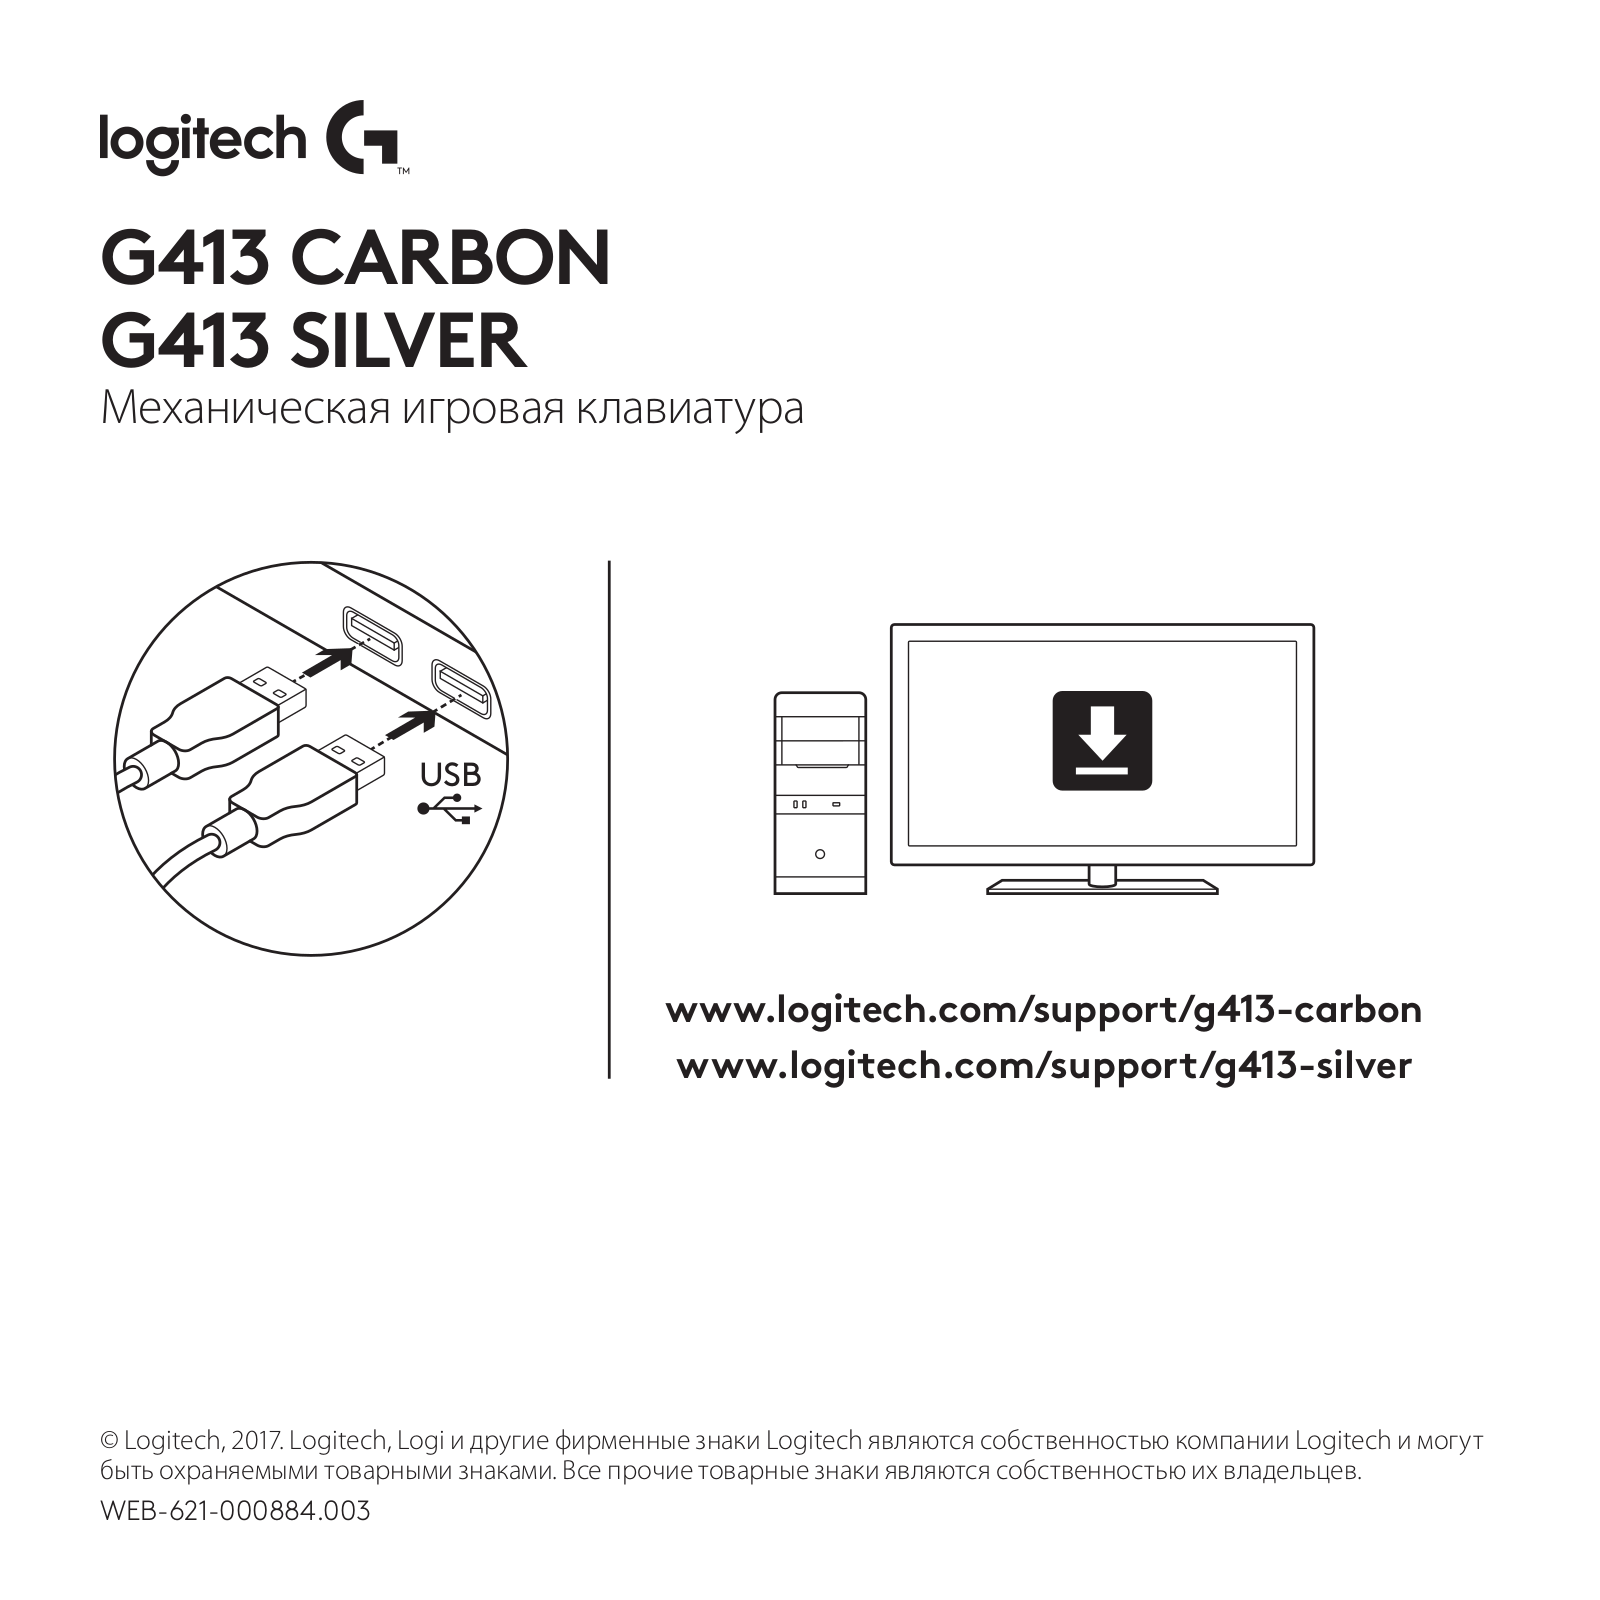 Logitech G413 User Manual